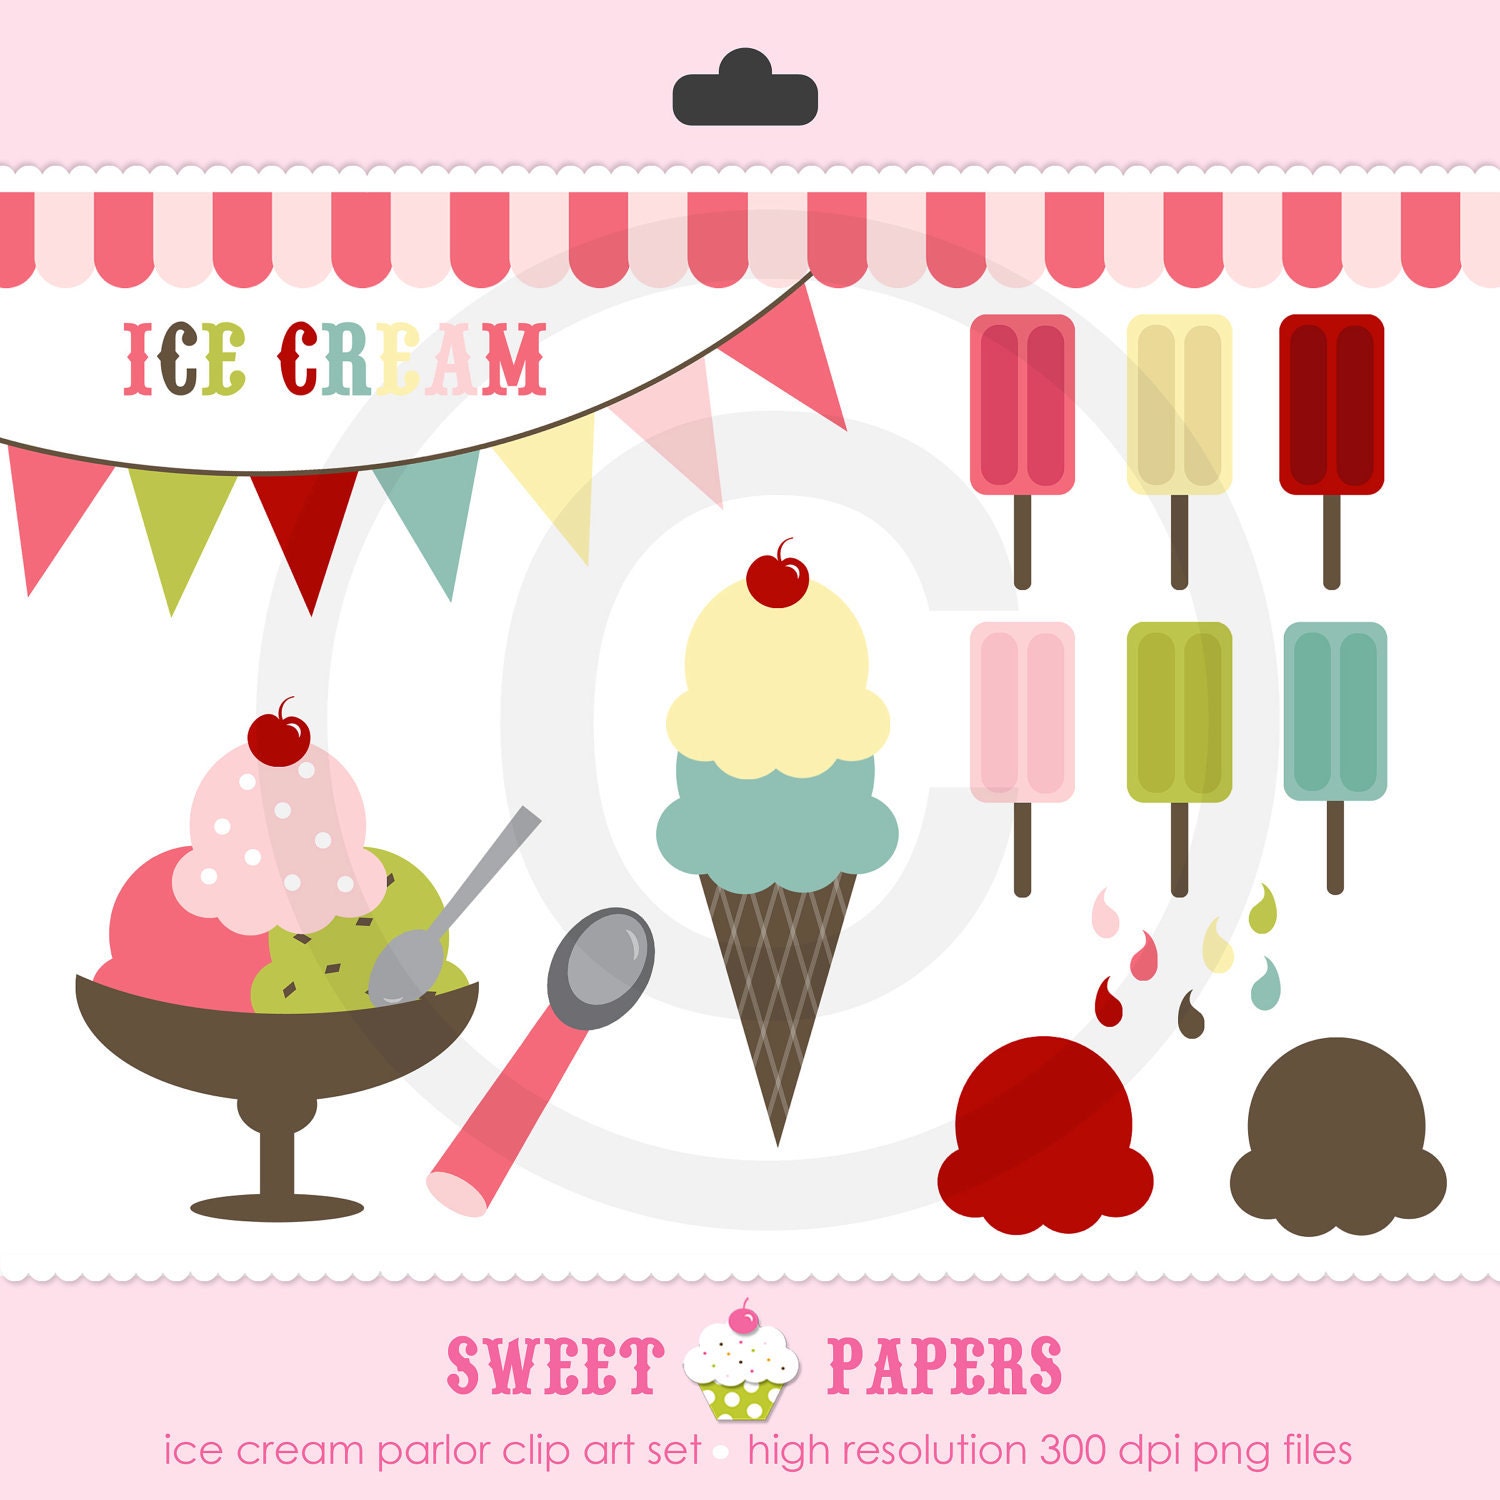 ice cream social clipart - photo #50